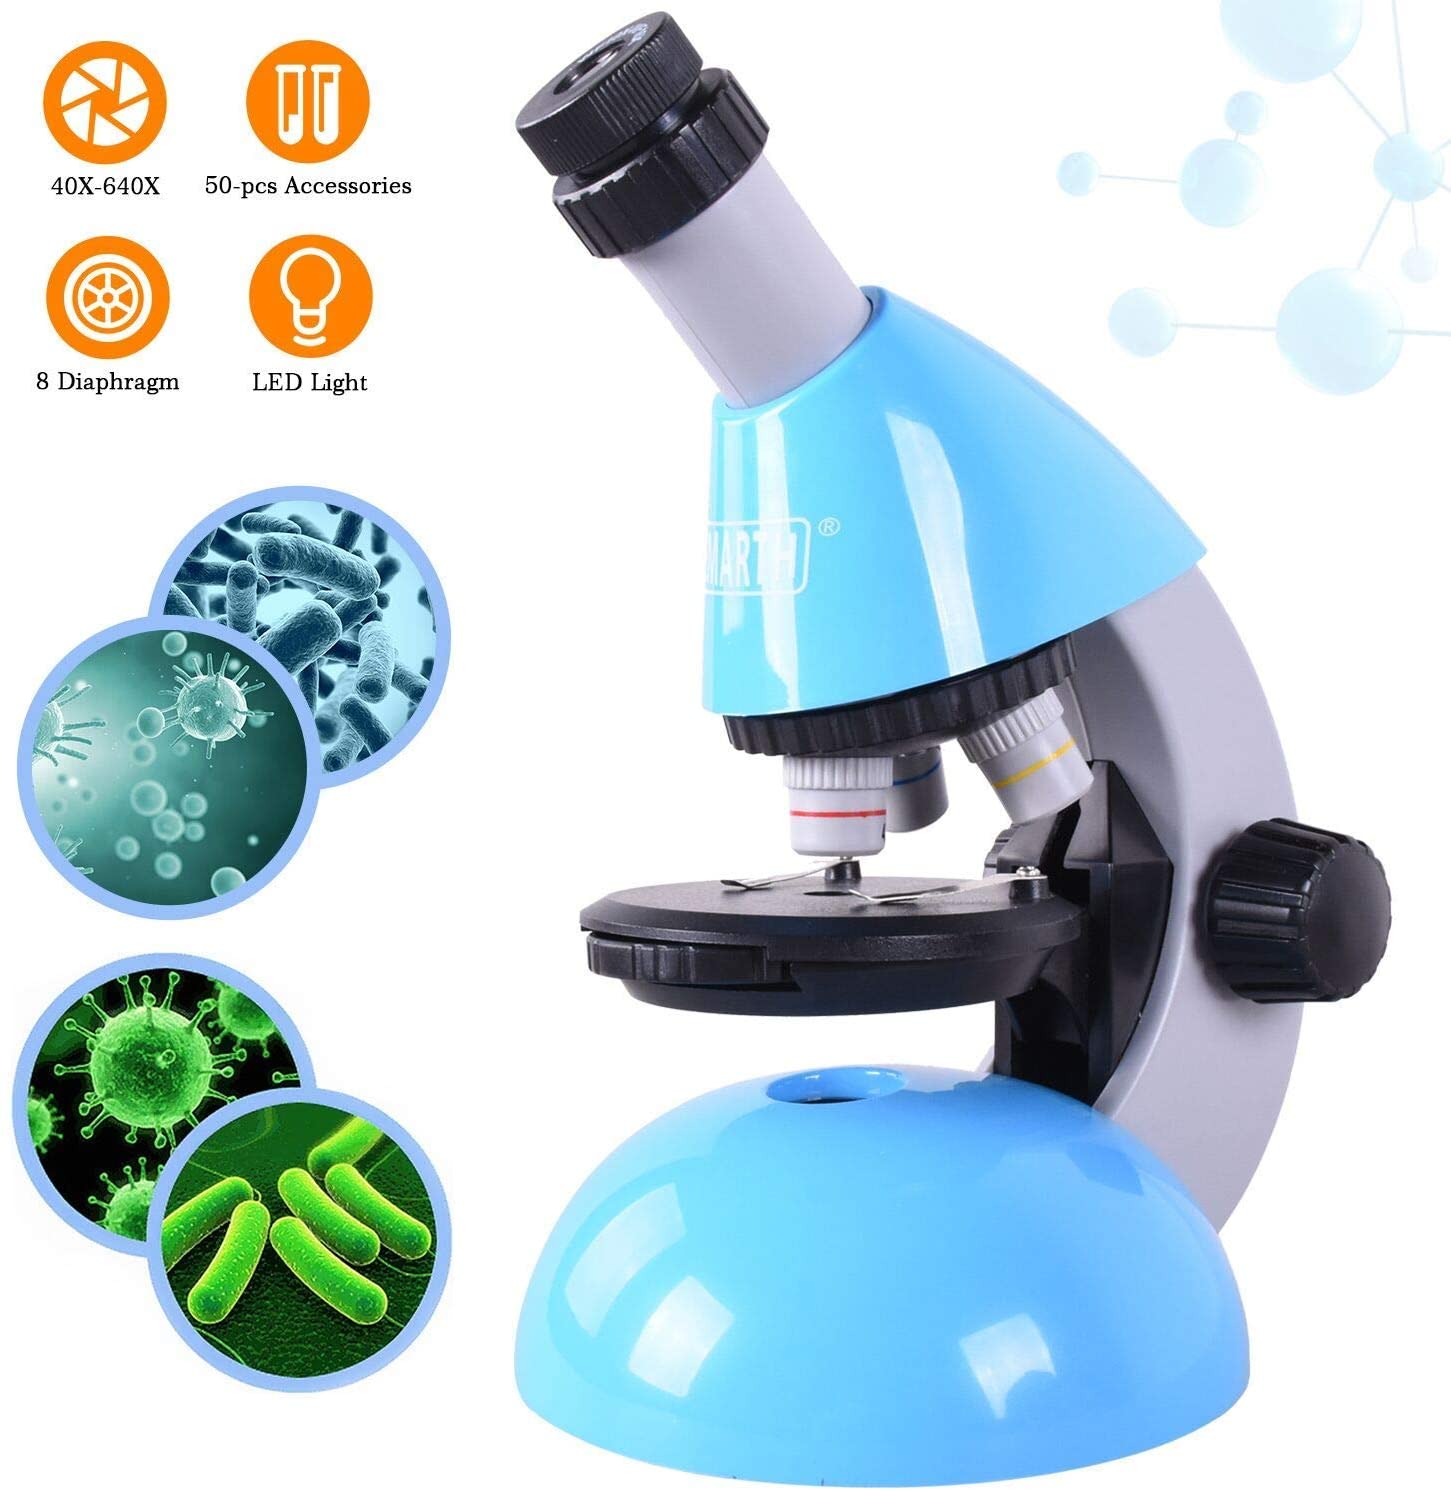 Microscopio para niños - Educandis